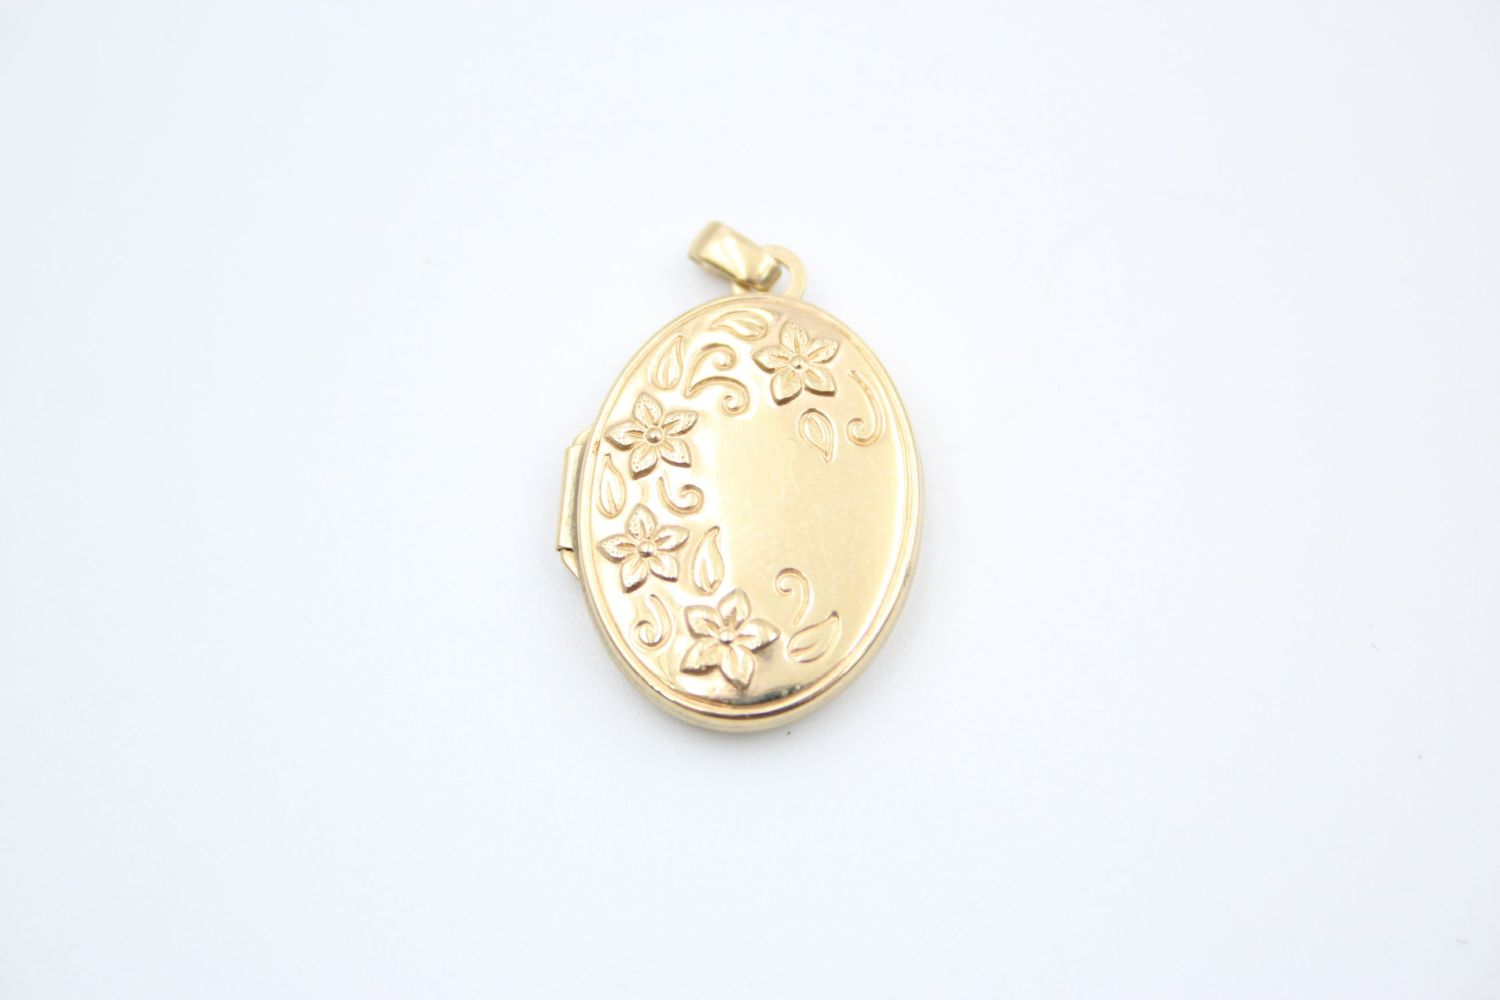 2 x 9ct gold patterned locket pendants 3 grams gross - Image 2 of 8